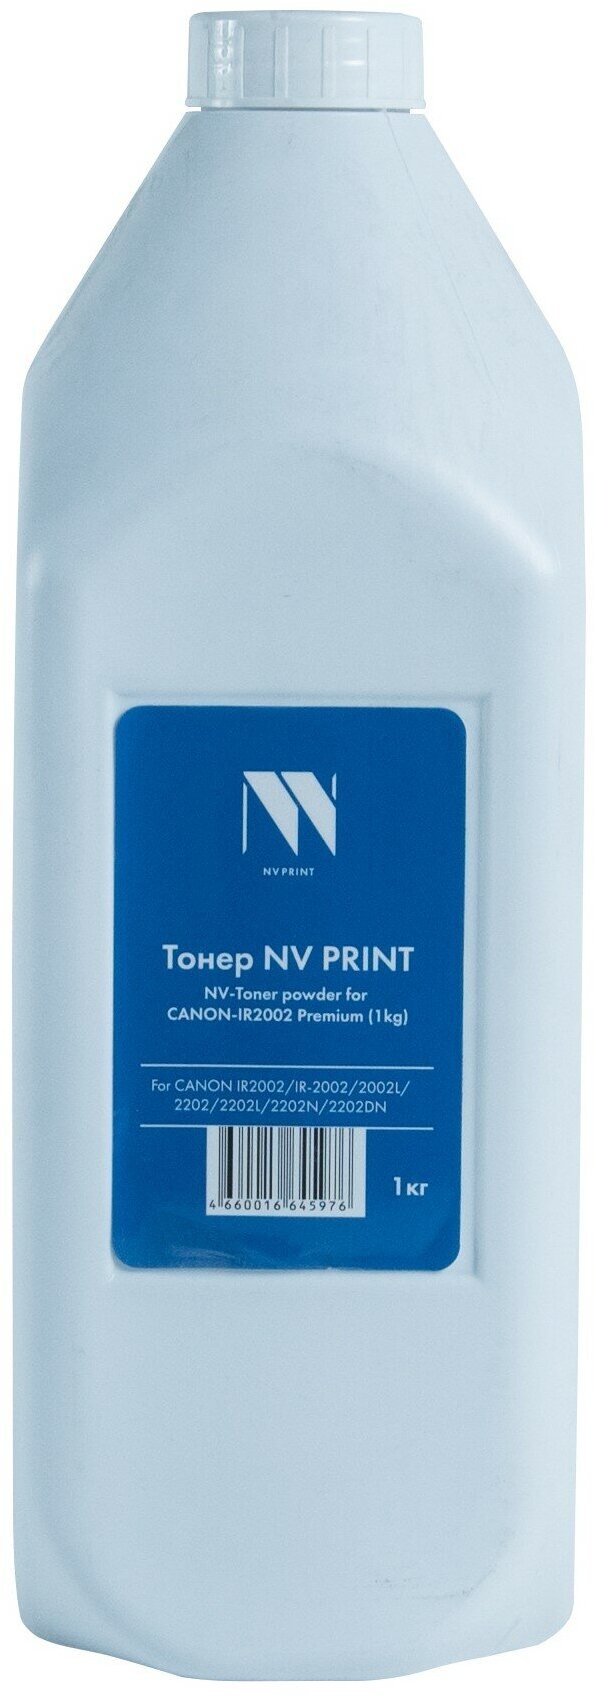 Тонер NV PRINT для CANON IR2202 Premium (1кг)